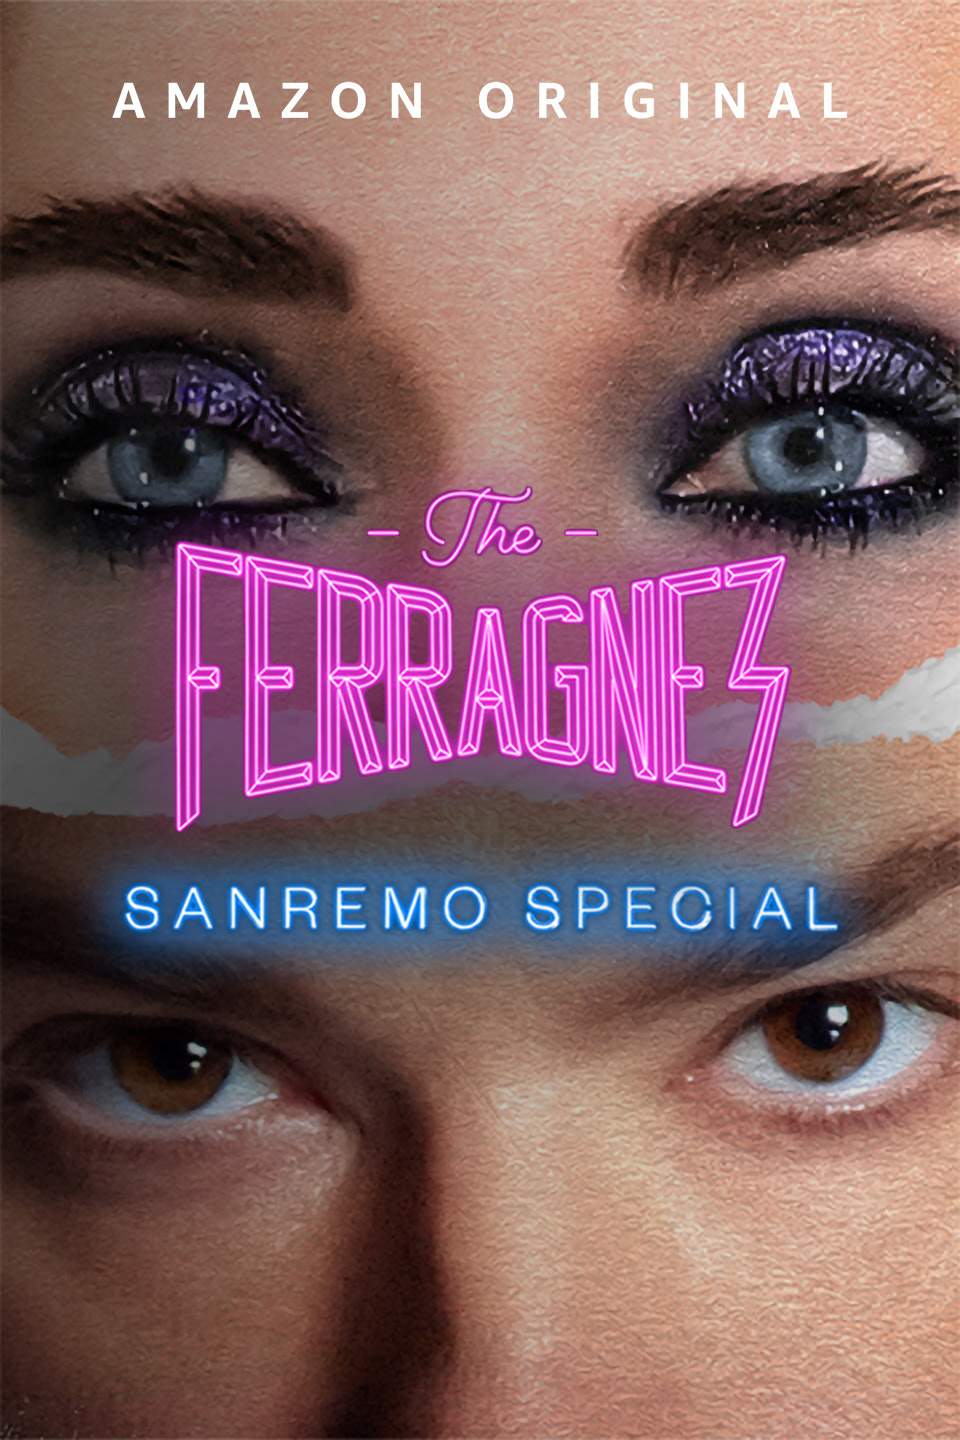 THE FERRAGNEZ: SANREMO SPECIAL